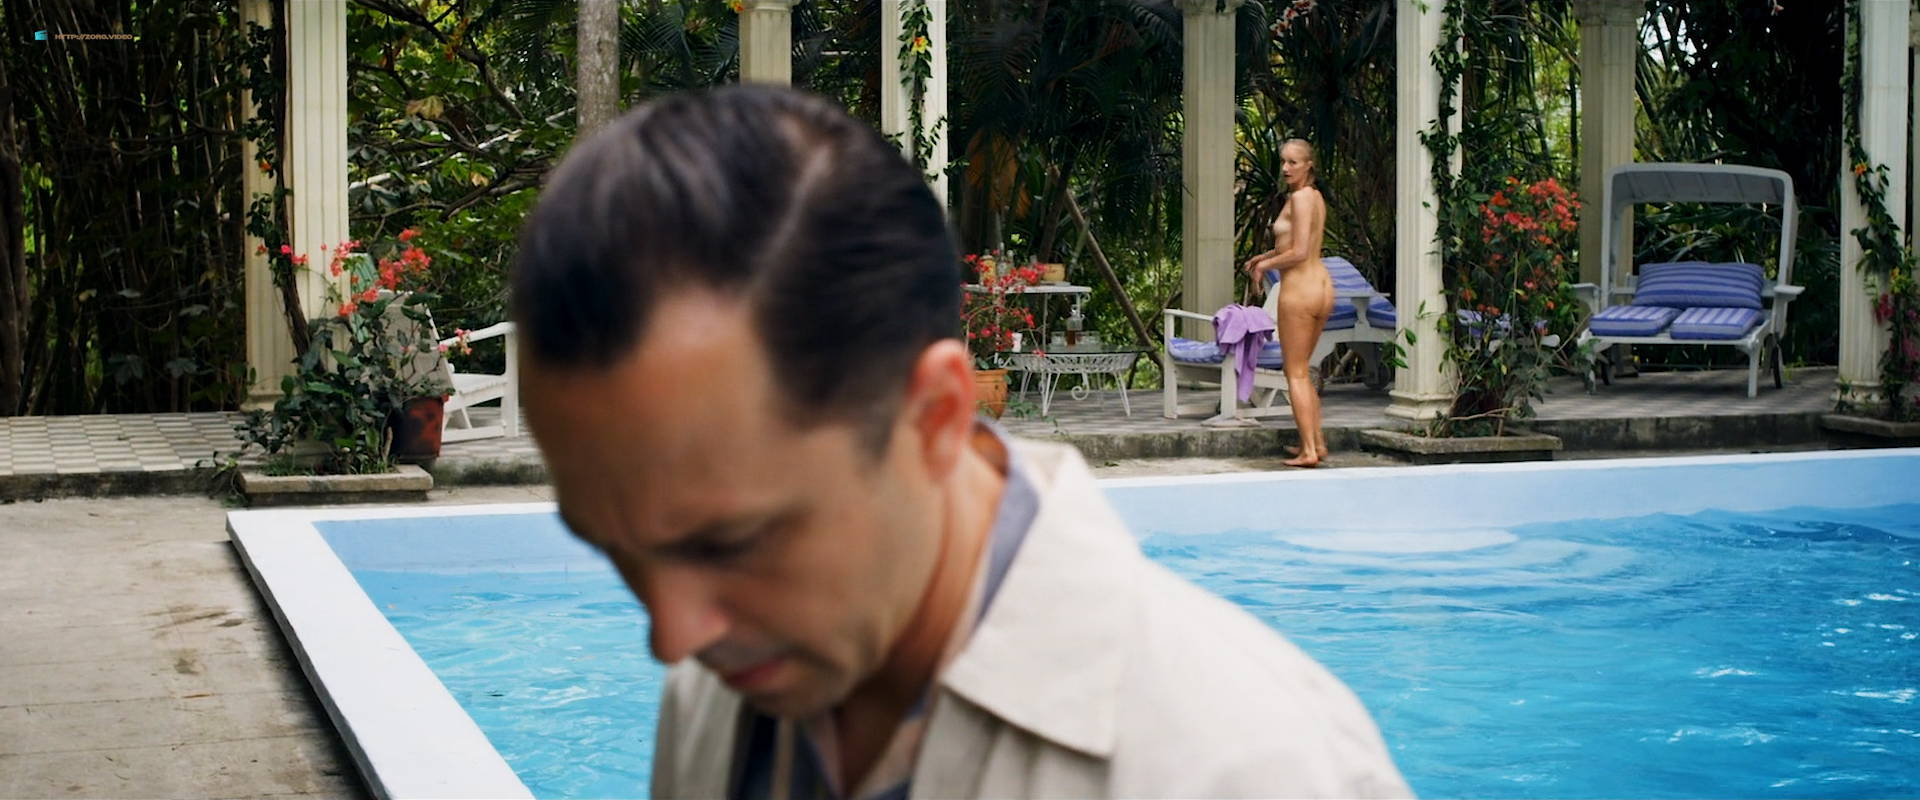 Minka Kelly nude butt Joely Richardson nude and skinny dipping - Papa Hemingway in Cuba (2015) HD 1080p web (11)